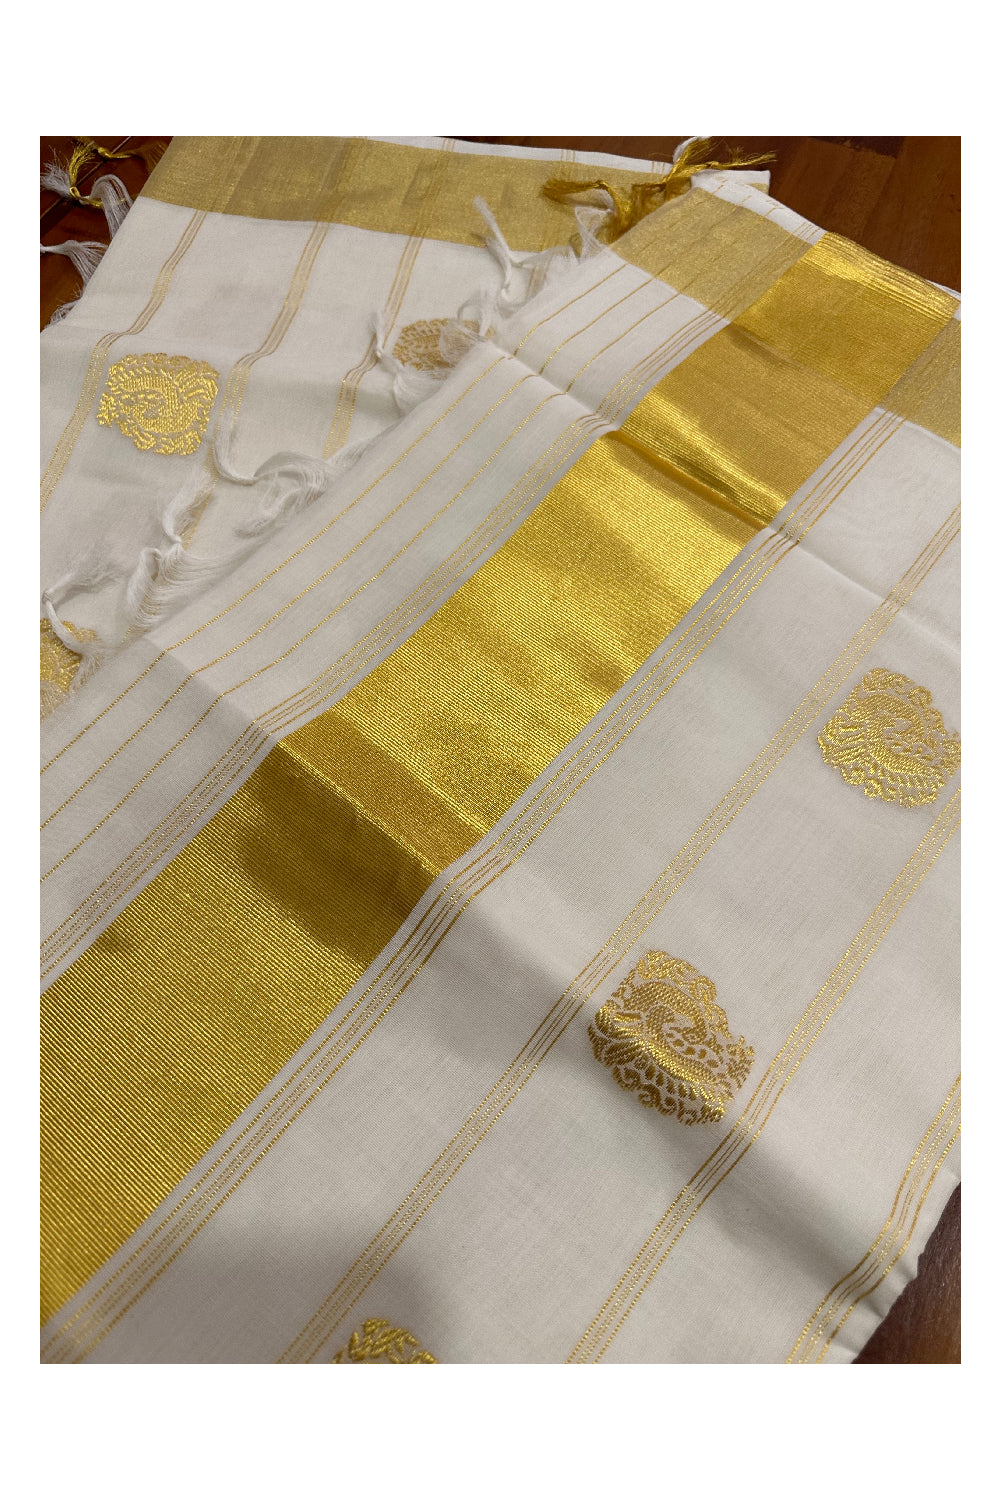 Southloom Premium Handloom Cotton Saree with Kasavu Peacock Woven Motifs